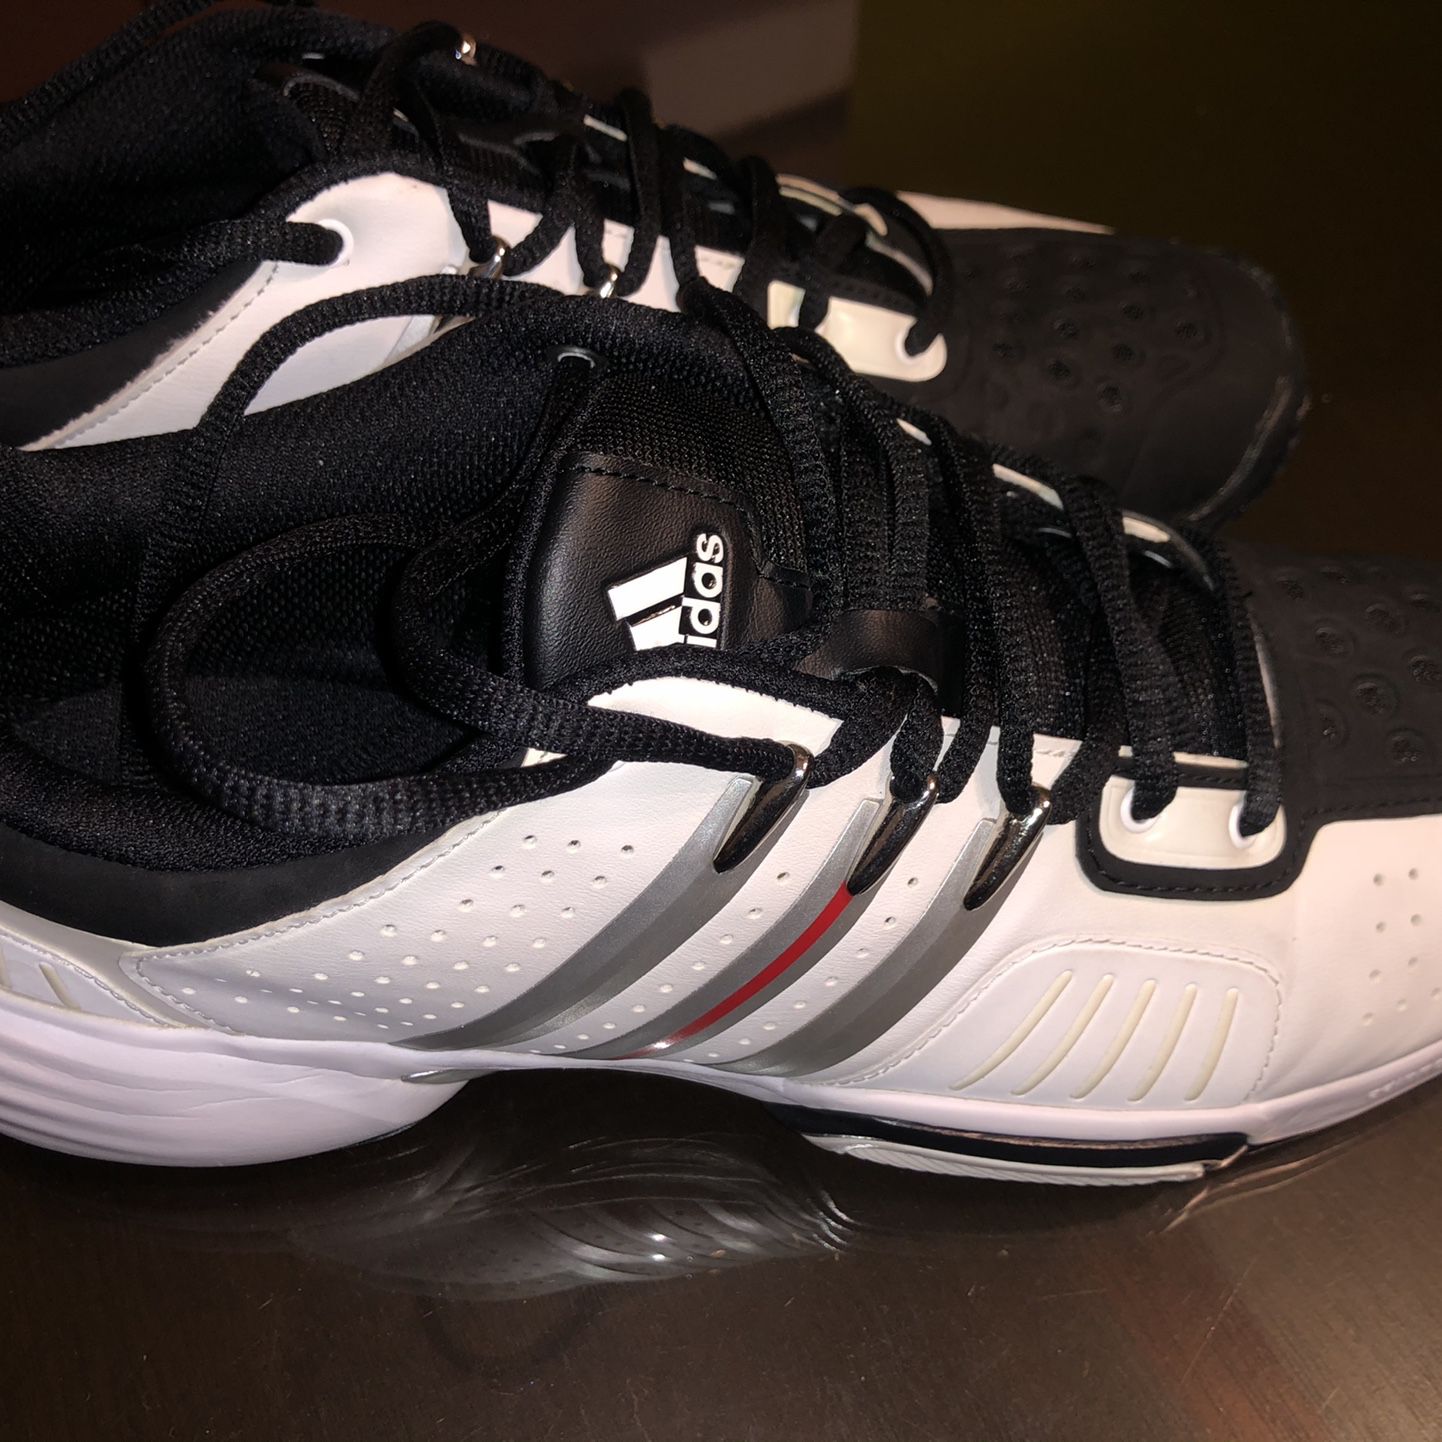 lo hizo Penetración Inseguro Adidas Adituff Mens Size 9.5 Athletic Shoes Sneakers for Sale in Lynwood,  CA - OfferUp